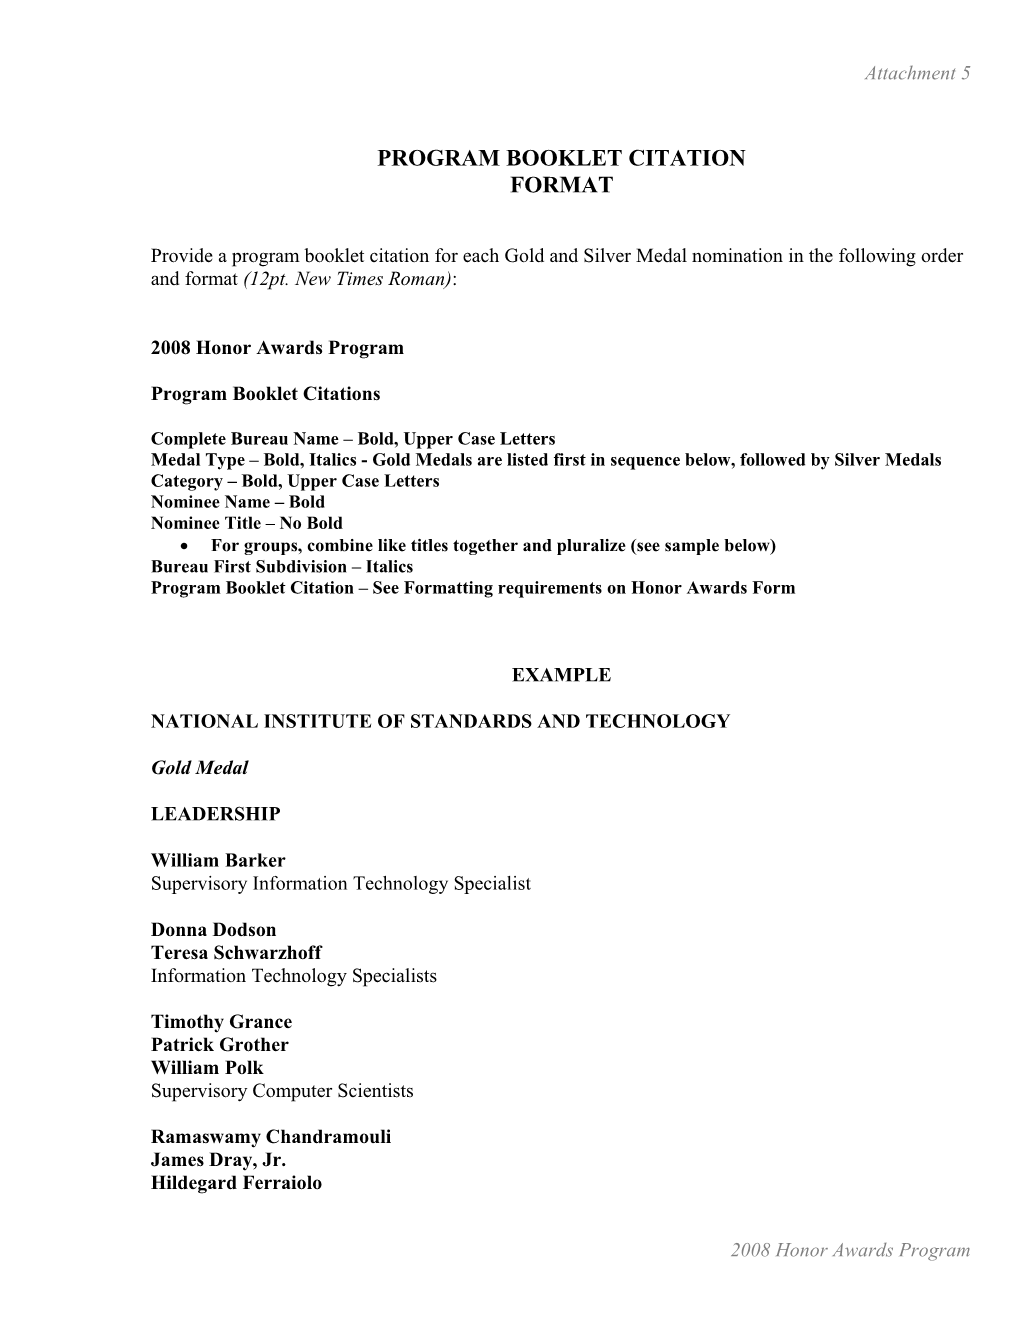 Program Booklet Citation